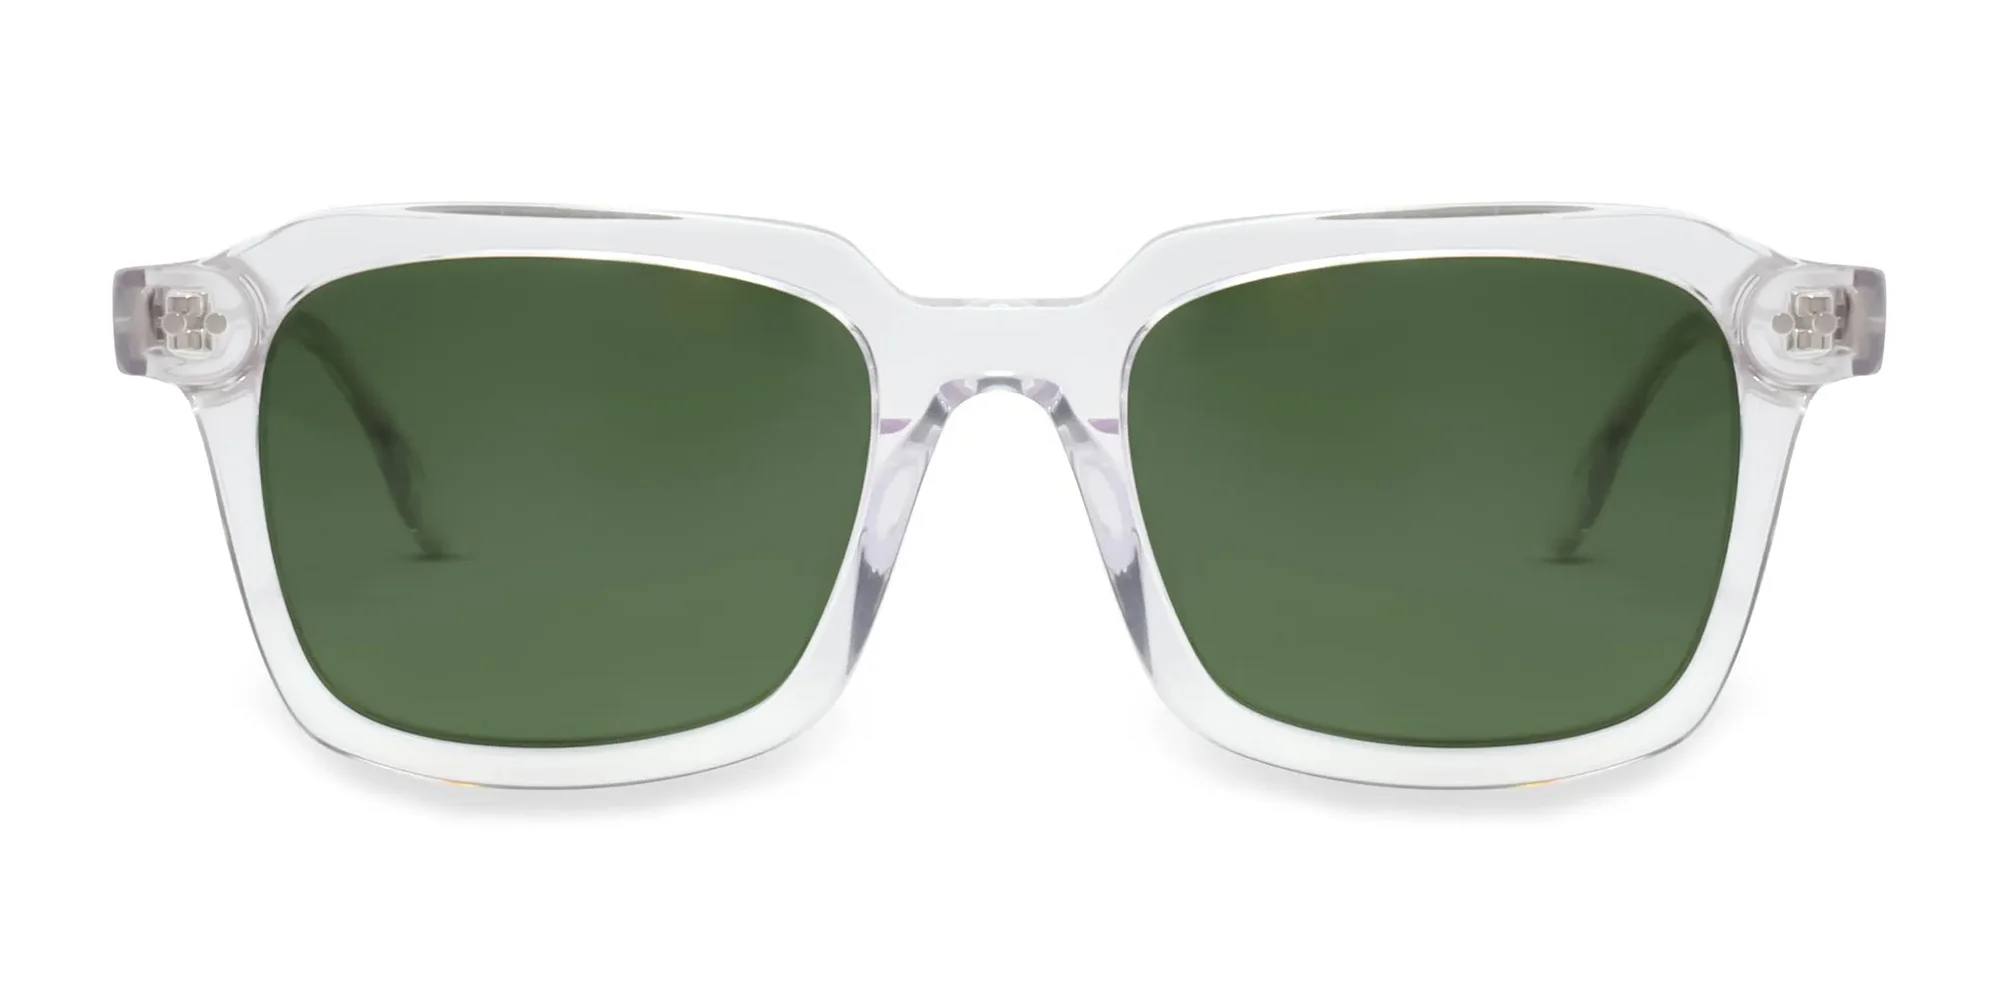 HUGO BOSS Sunglasses – Elaborate designs | Men